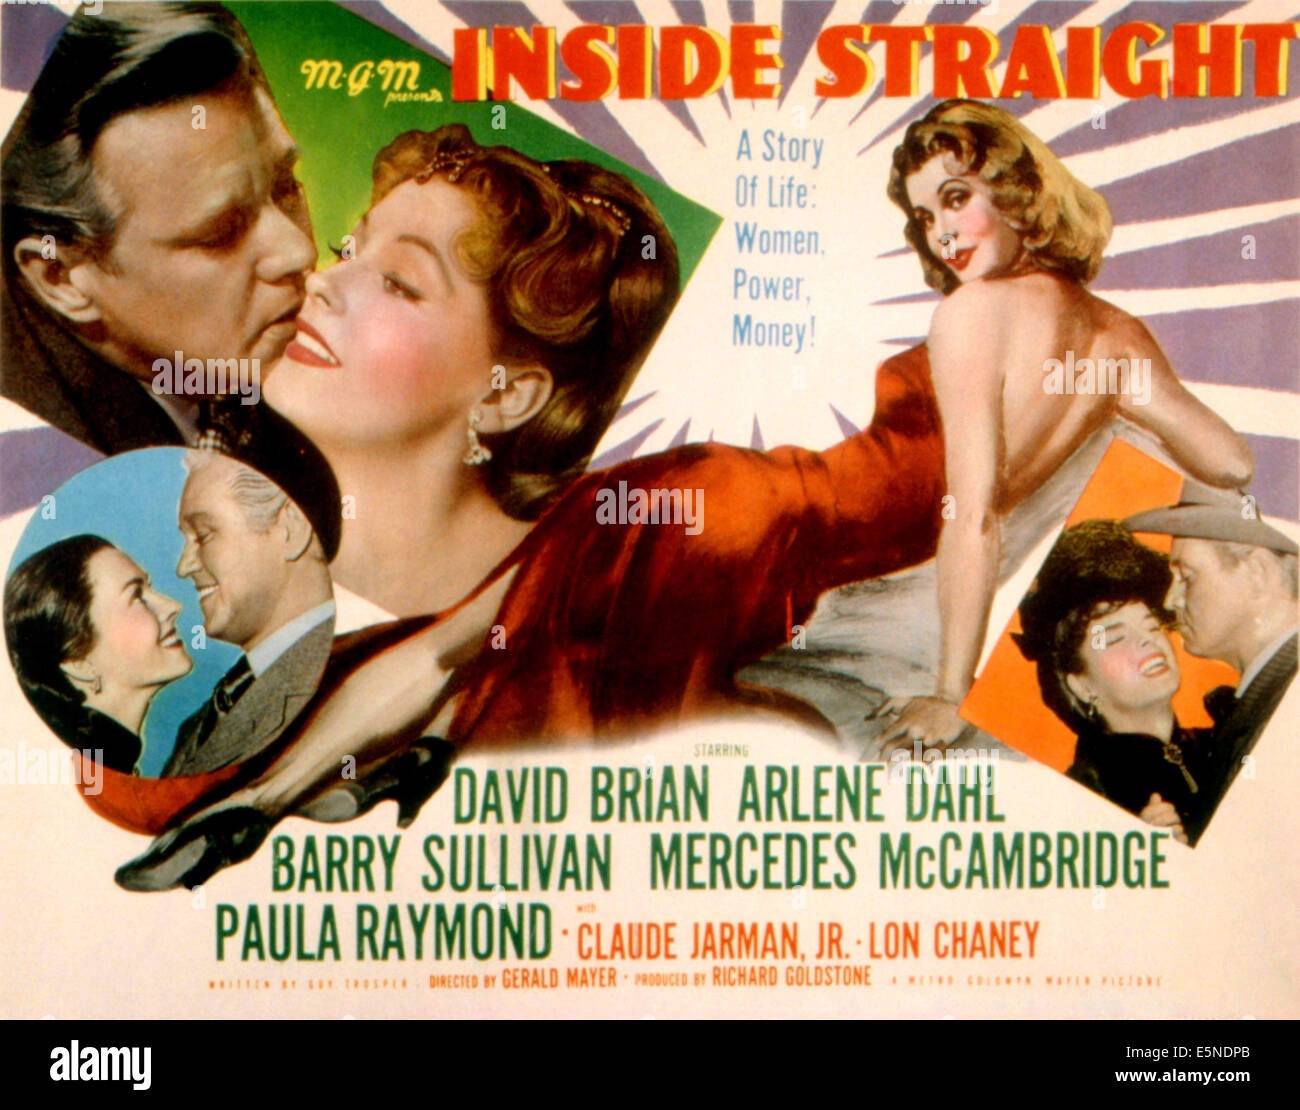 INSIDE STRAIGHT, David Brian, Arlene Dahl, Mercedes McCambridge, 1951 Stock Photo